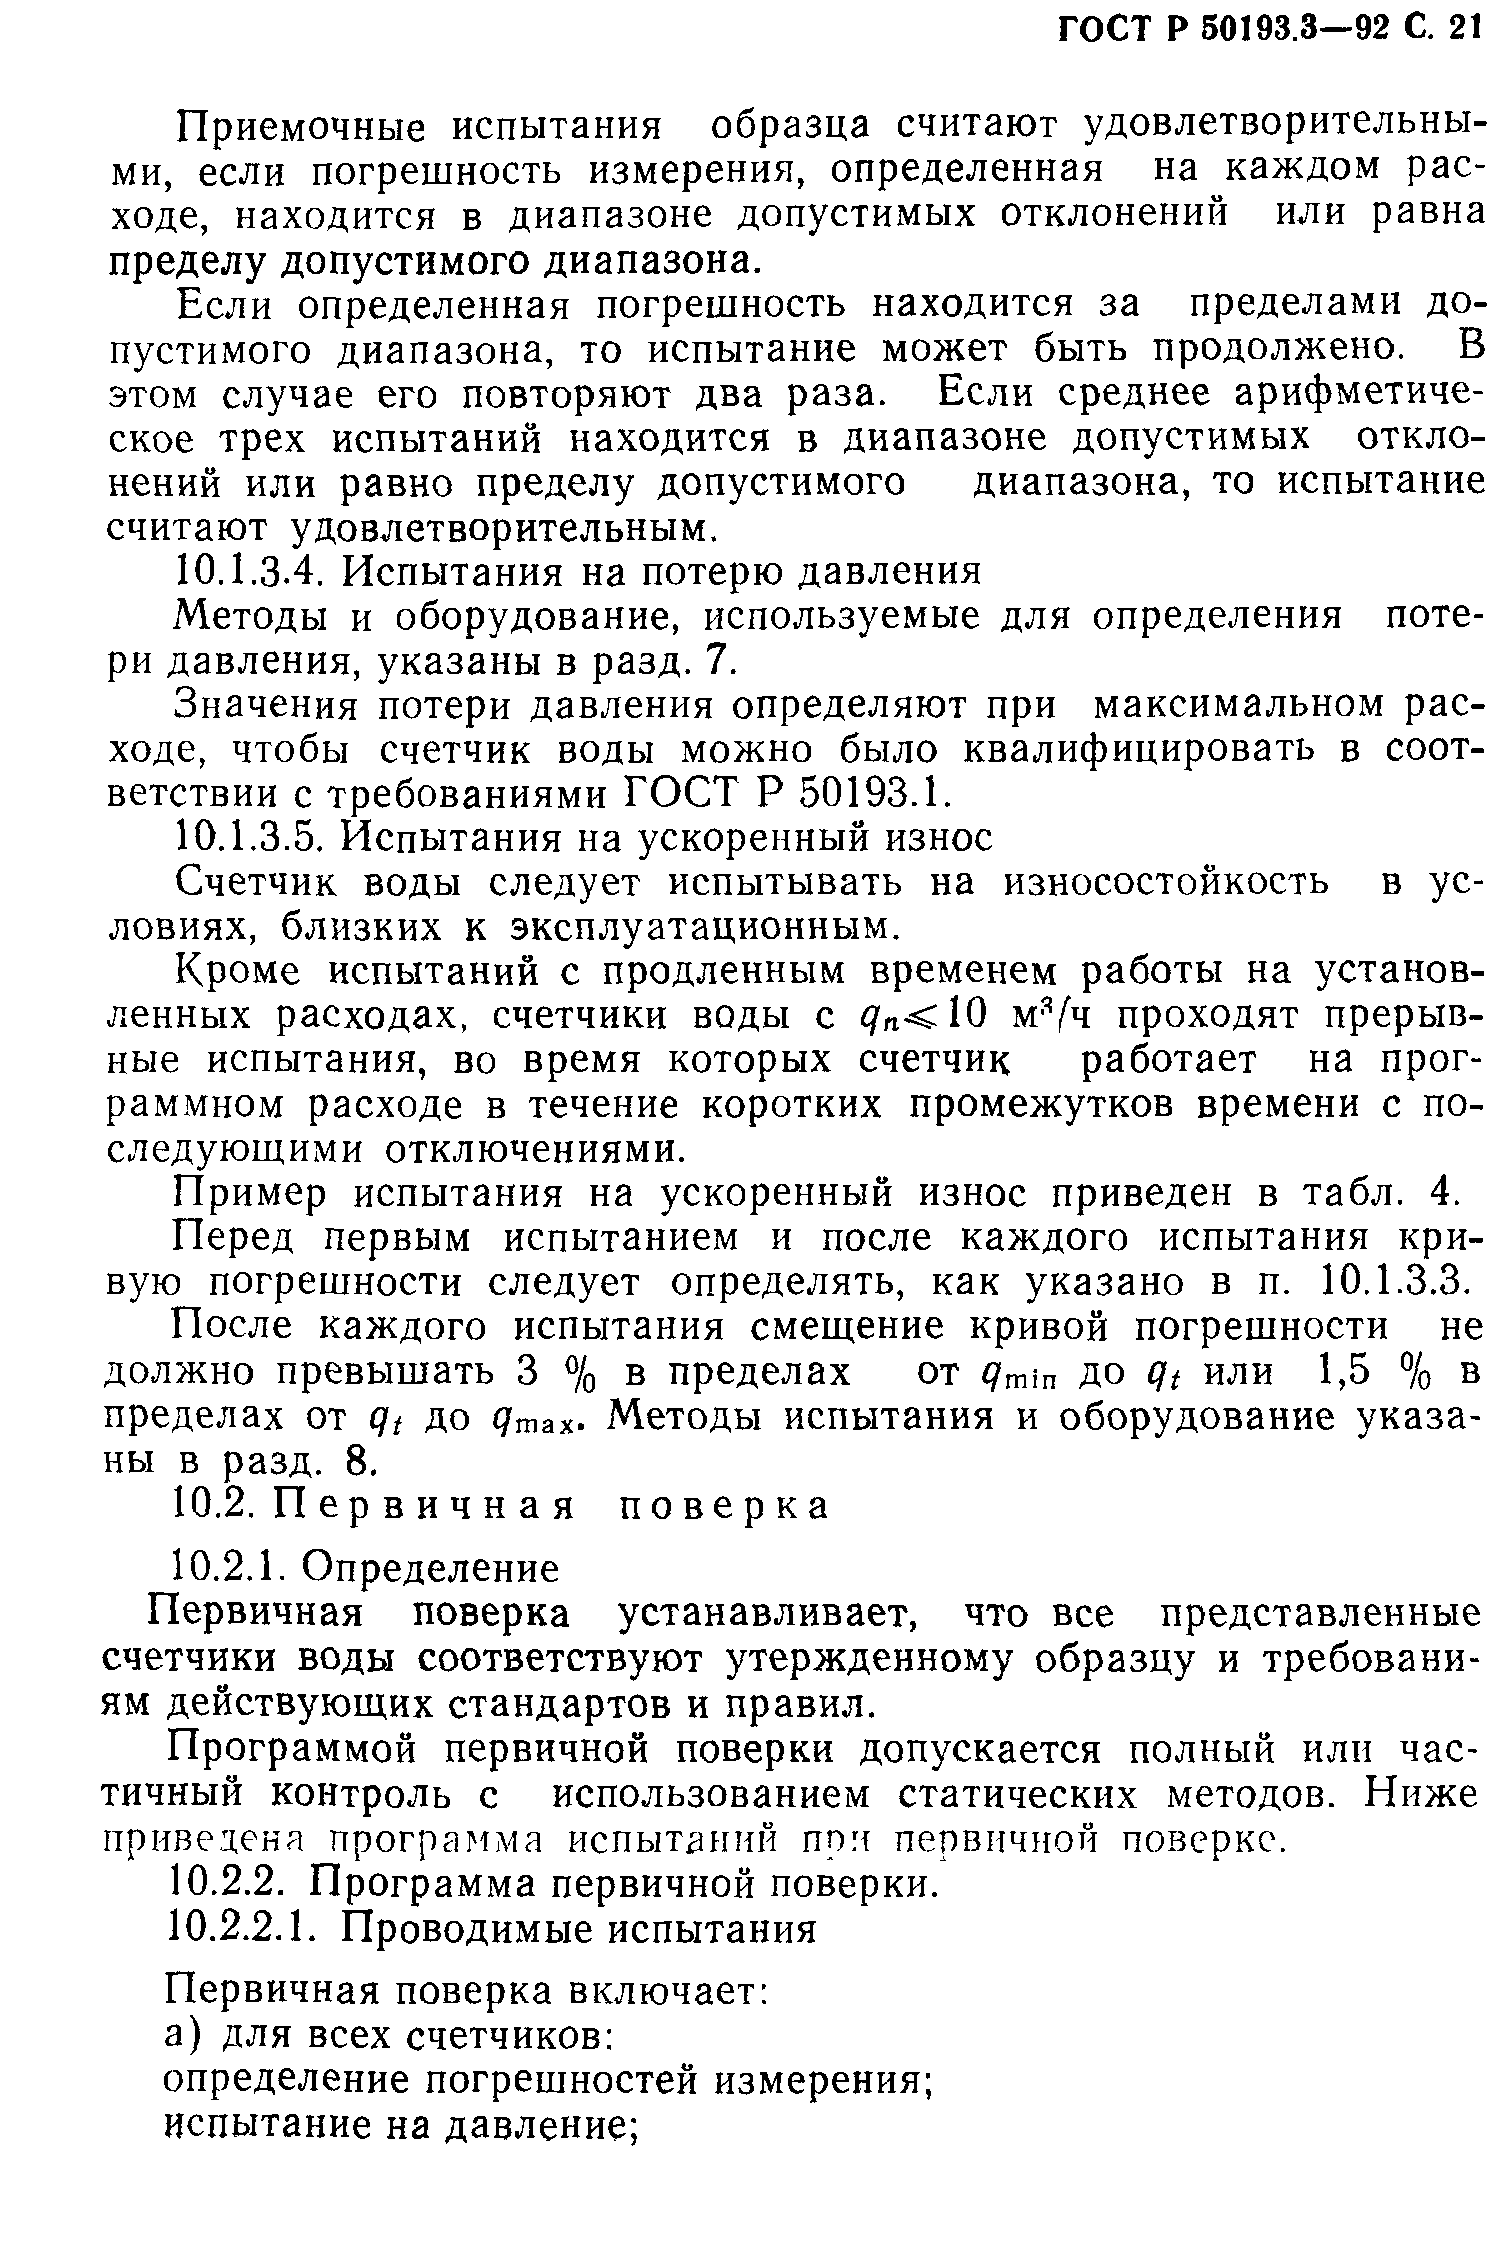 ГОСТ Р 50193.3-92